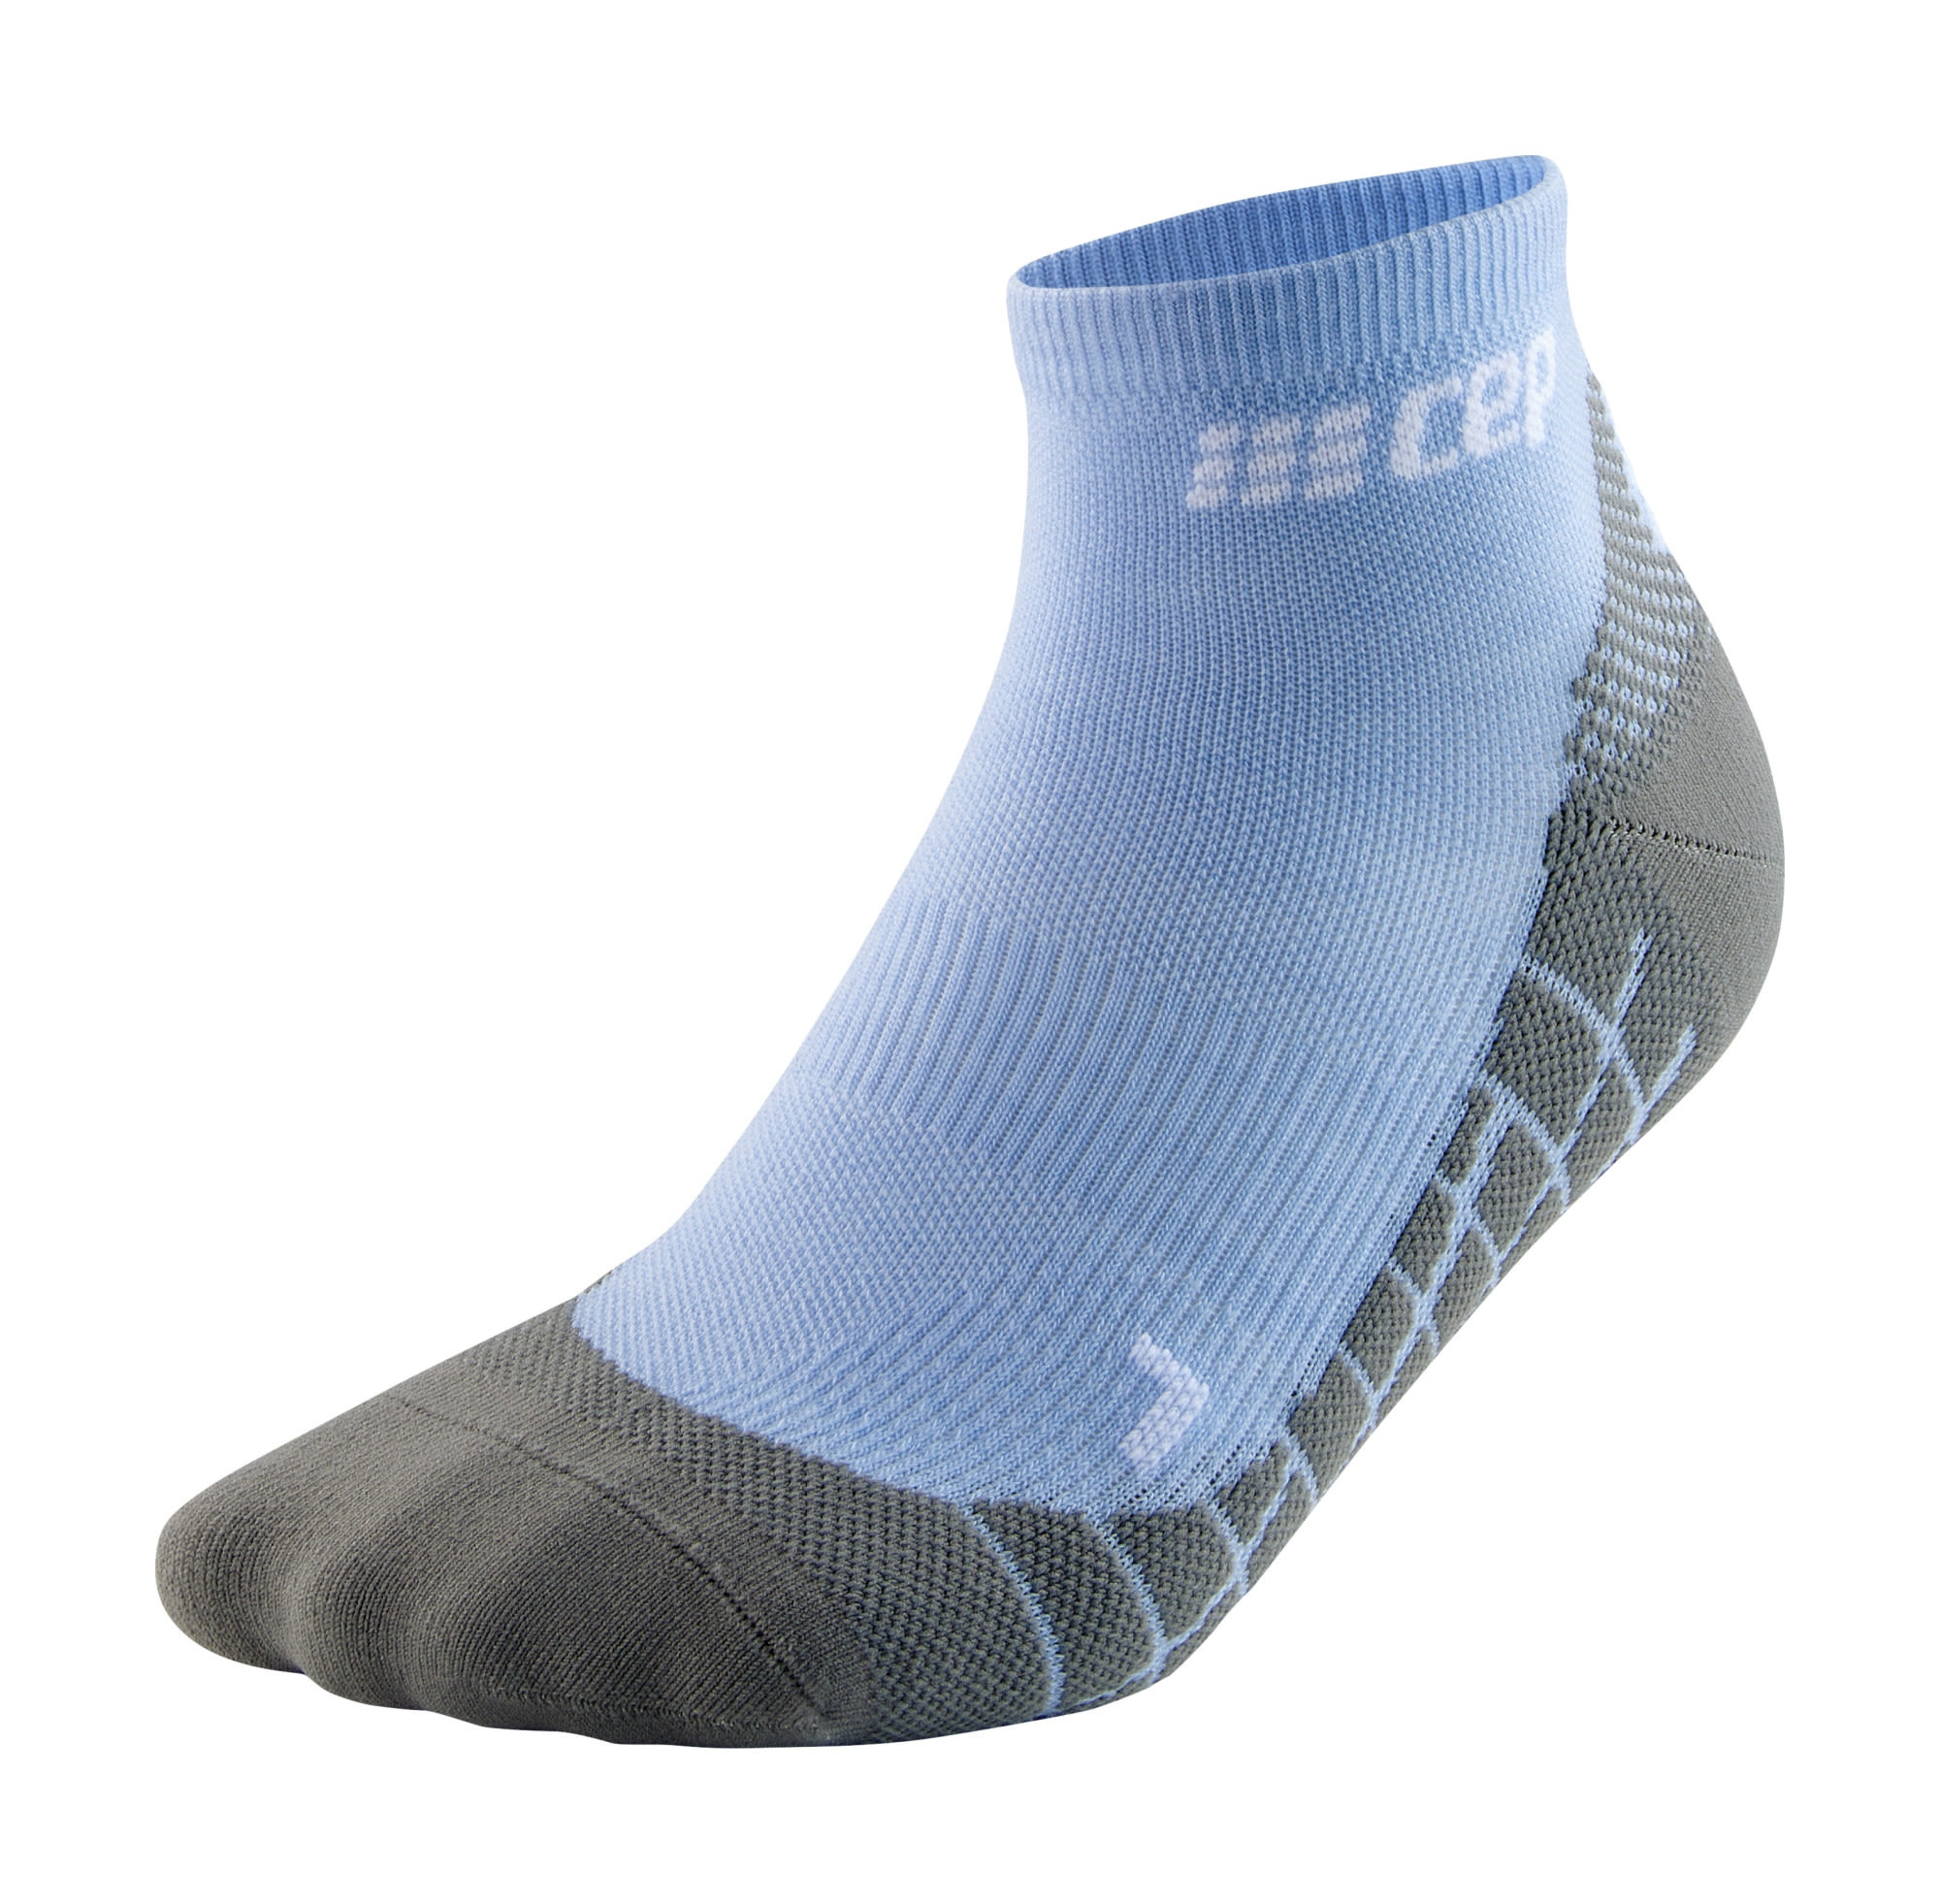 Cep W Light Merino Socks Hiking Low Cut Blau | Größe II | Damen Kompressionsso